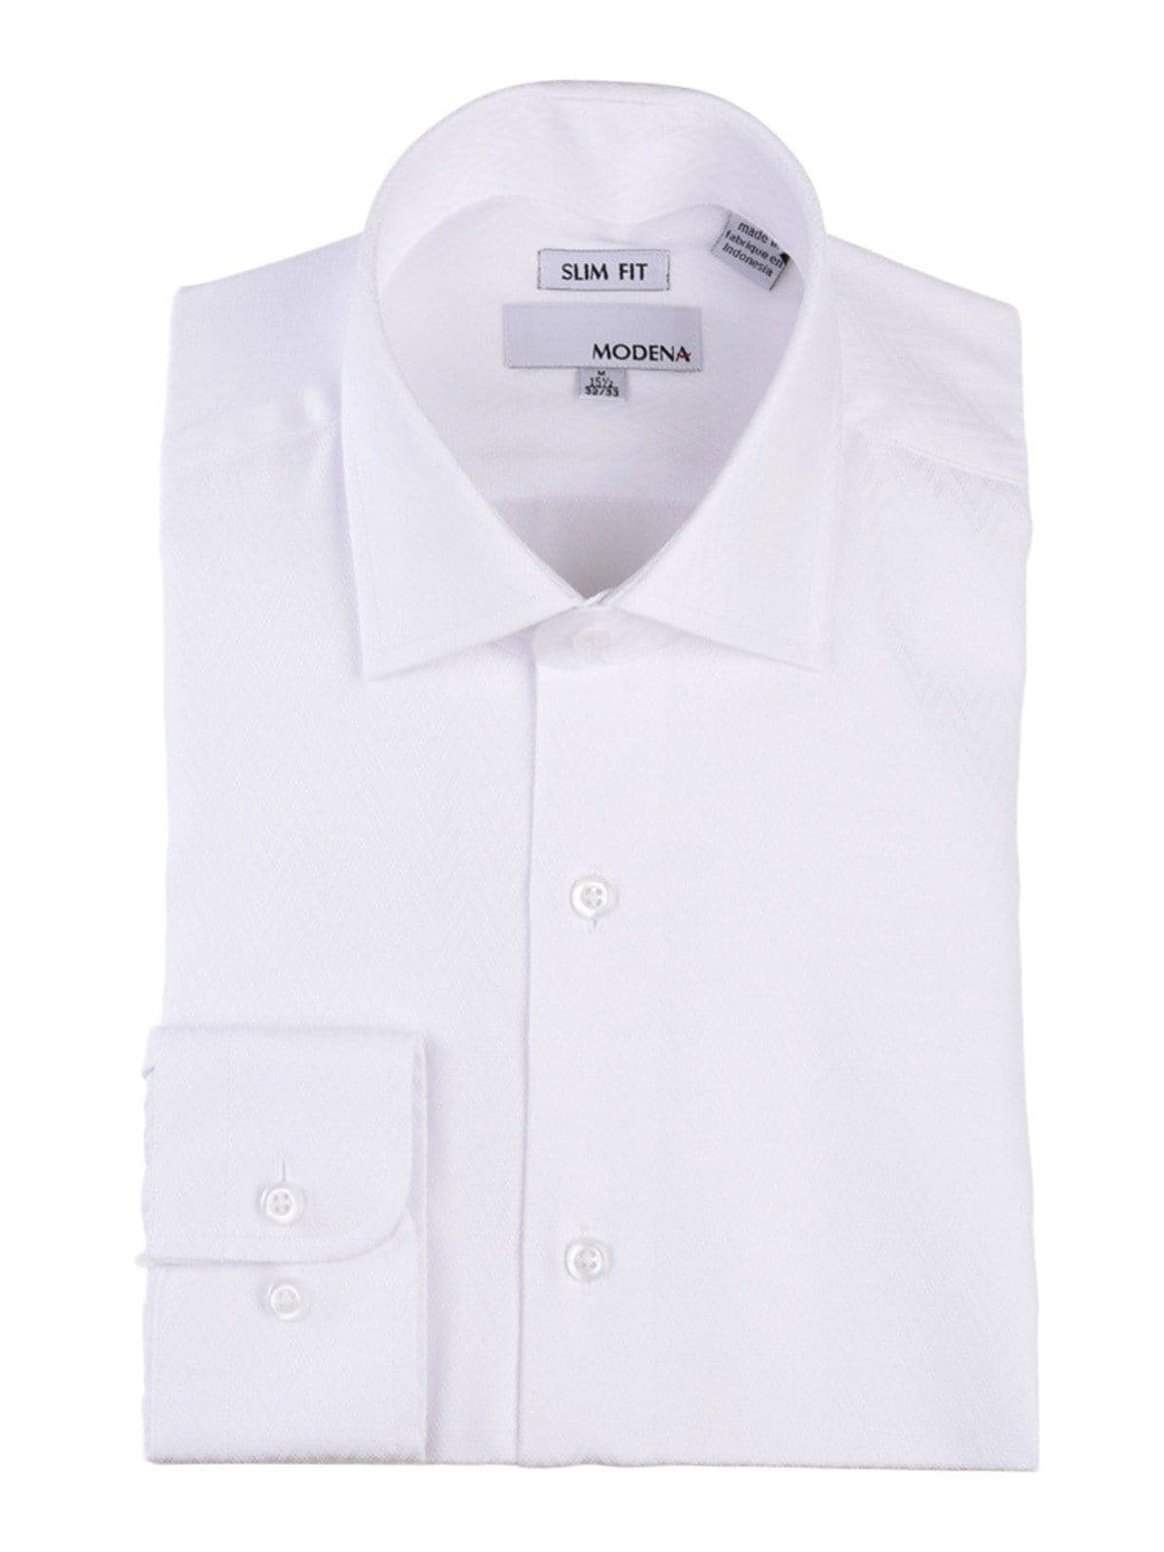 Modena SHIRTS 16 36/37 Slim Fit Off White Cream Chevron Check Spread Collar Cotton Blend Dress Shirt